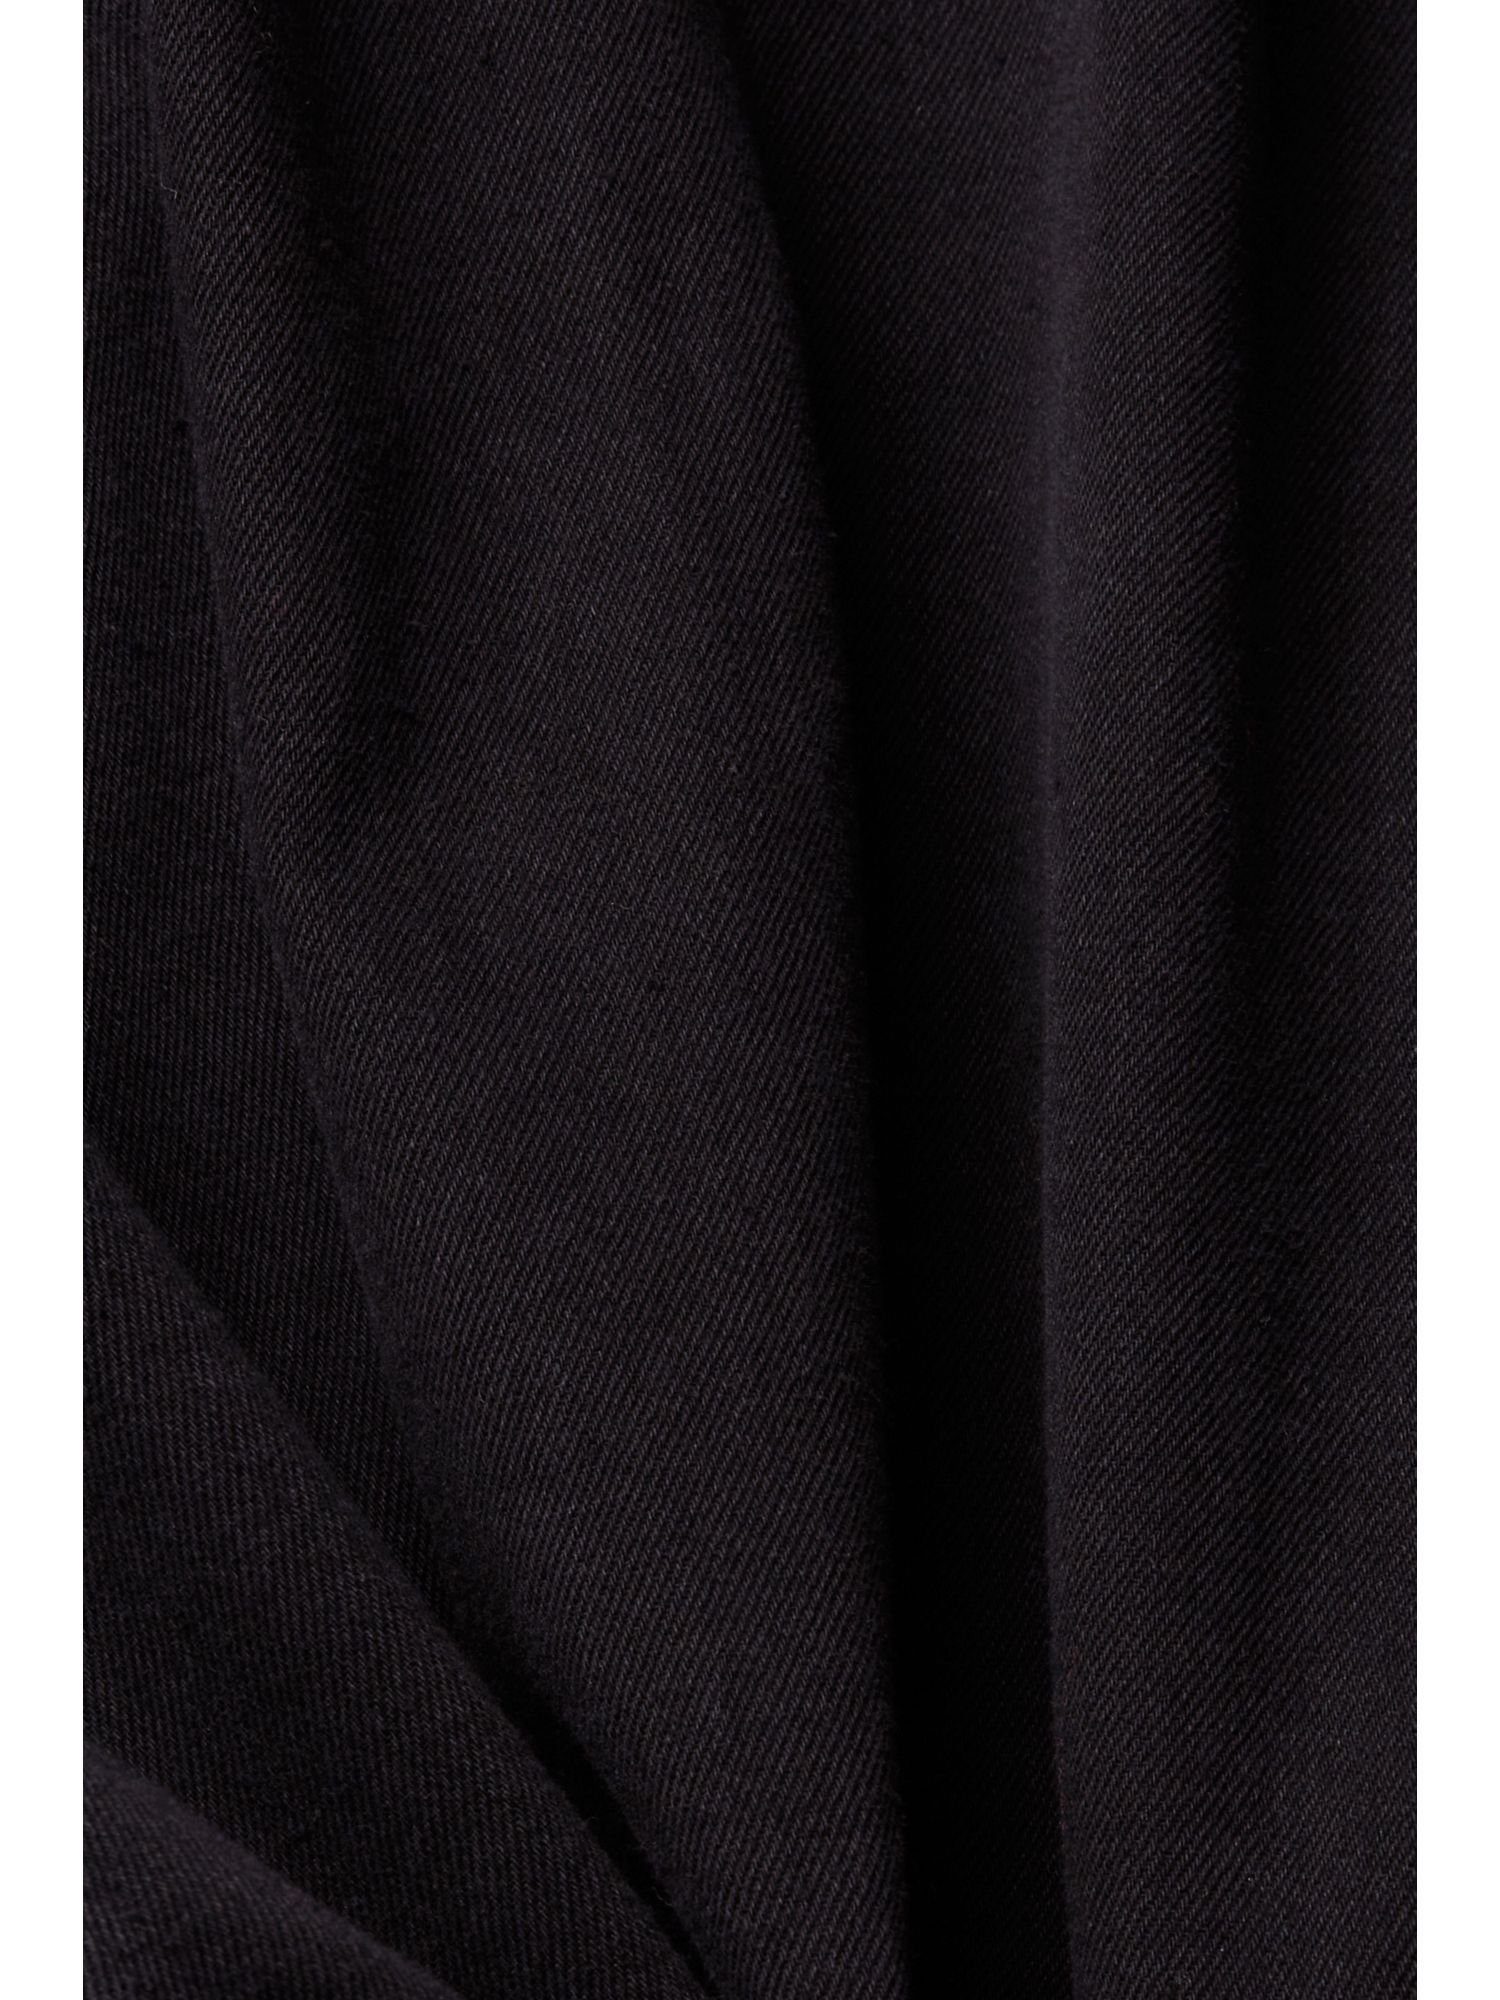 BLACK DARK Esprit Langarmhemd Denim-Shirt WASHED